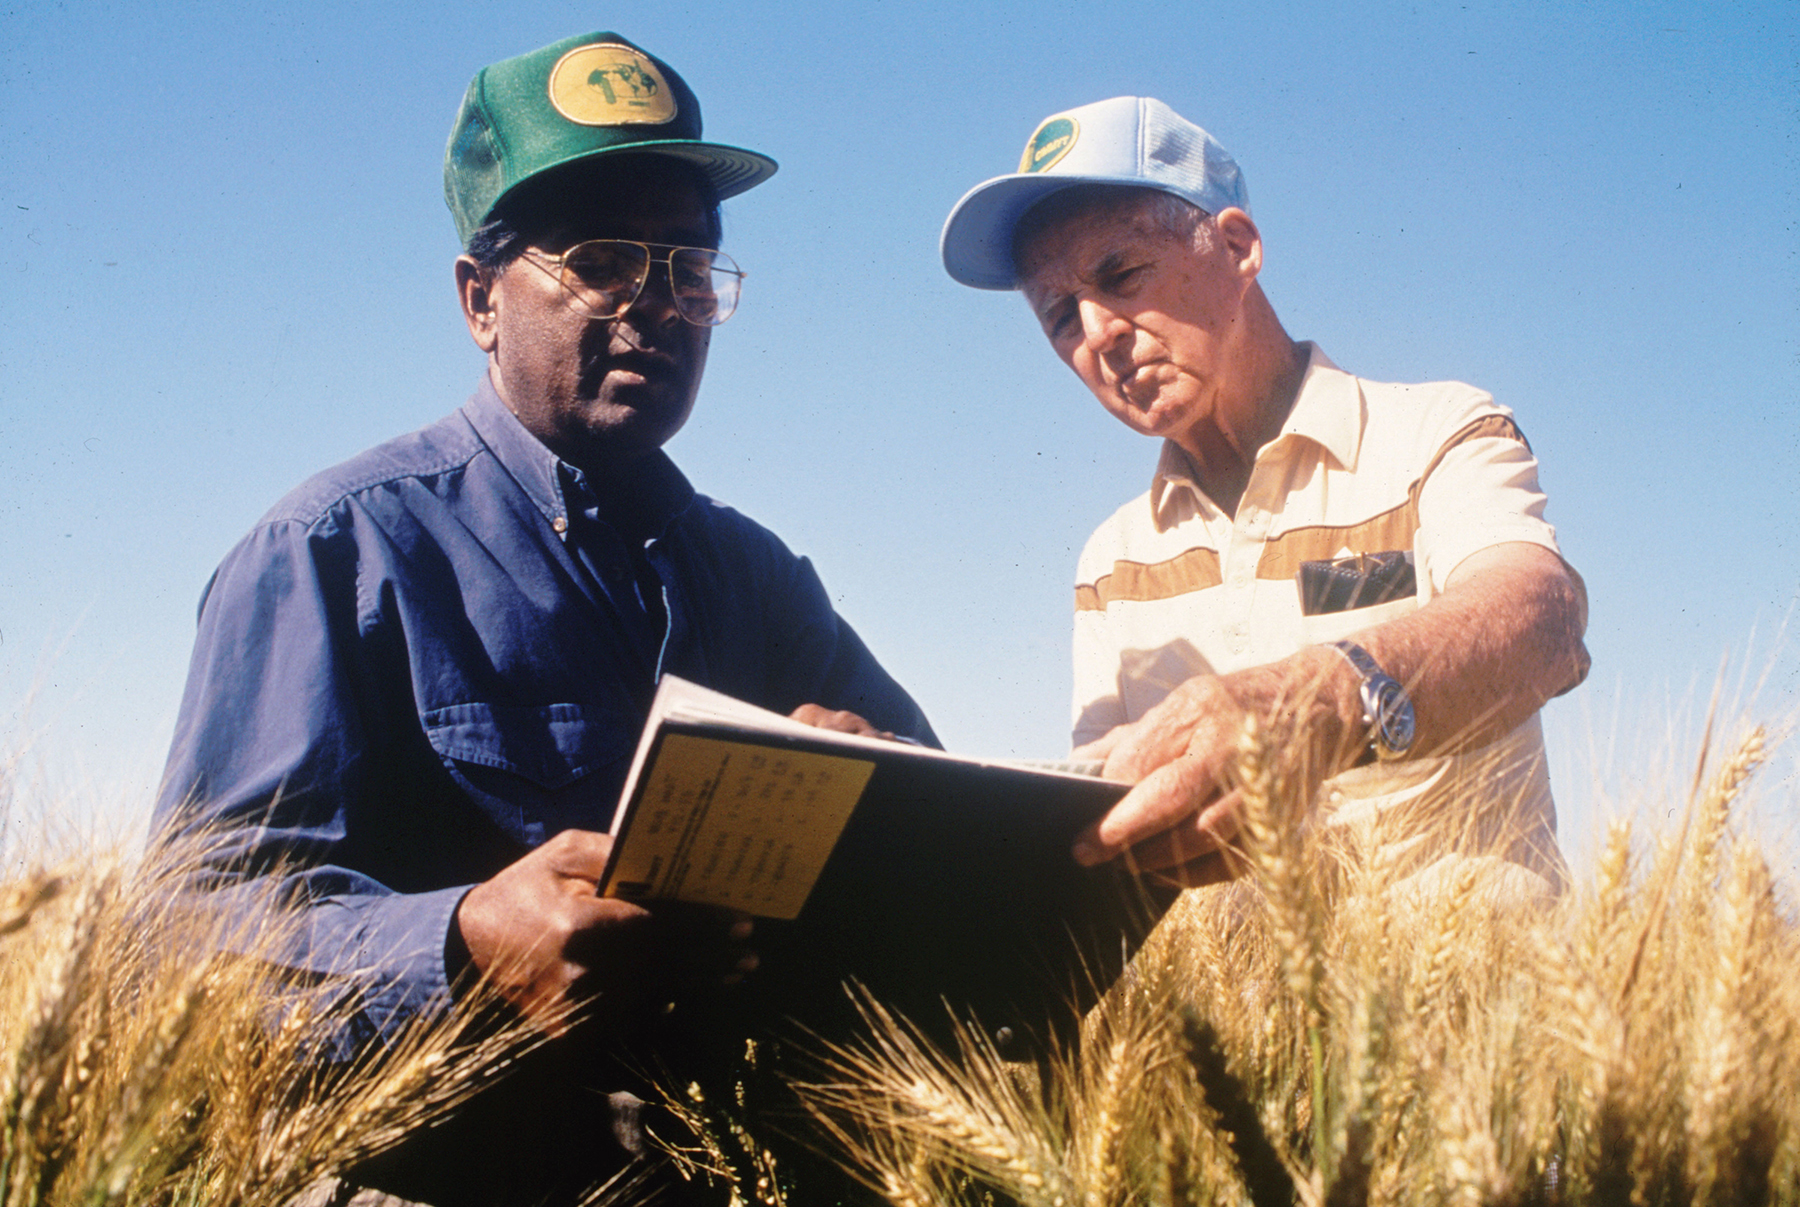 Sangaya Rajaram and Norman Borlaug working in wheat fields in Mexico.